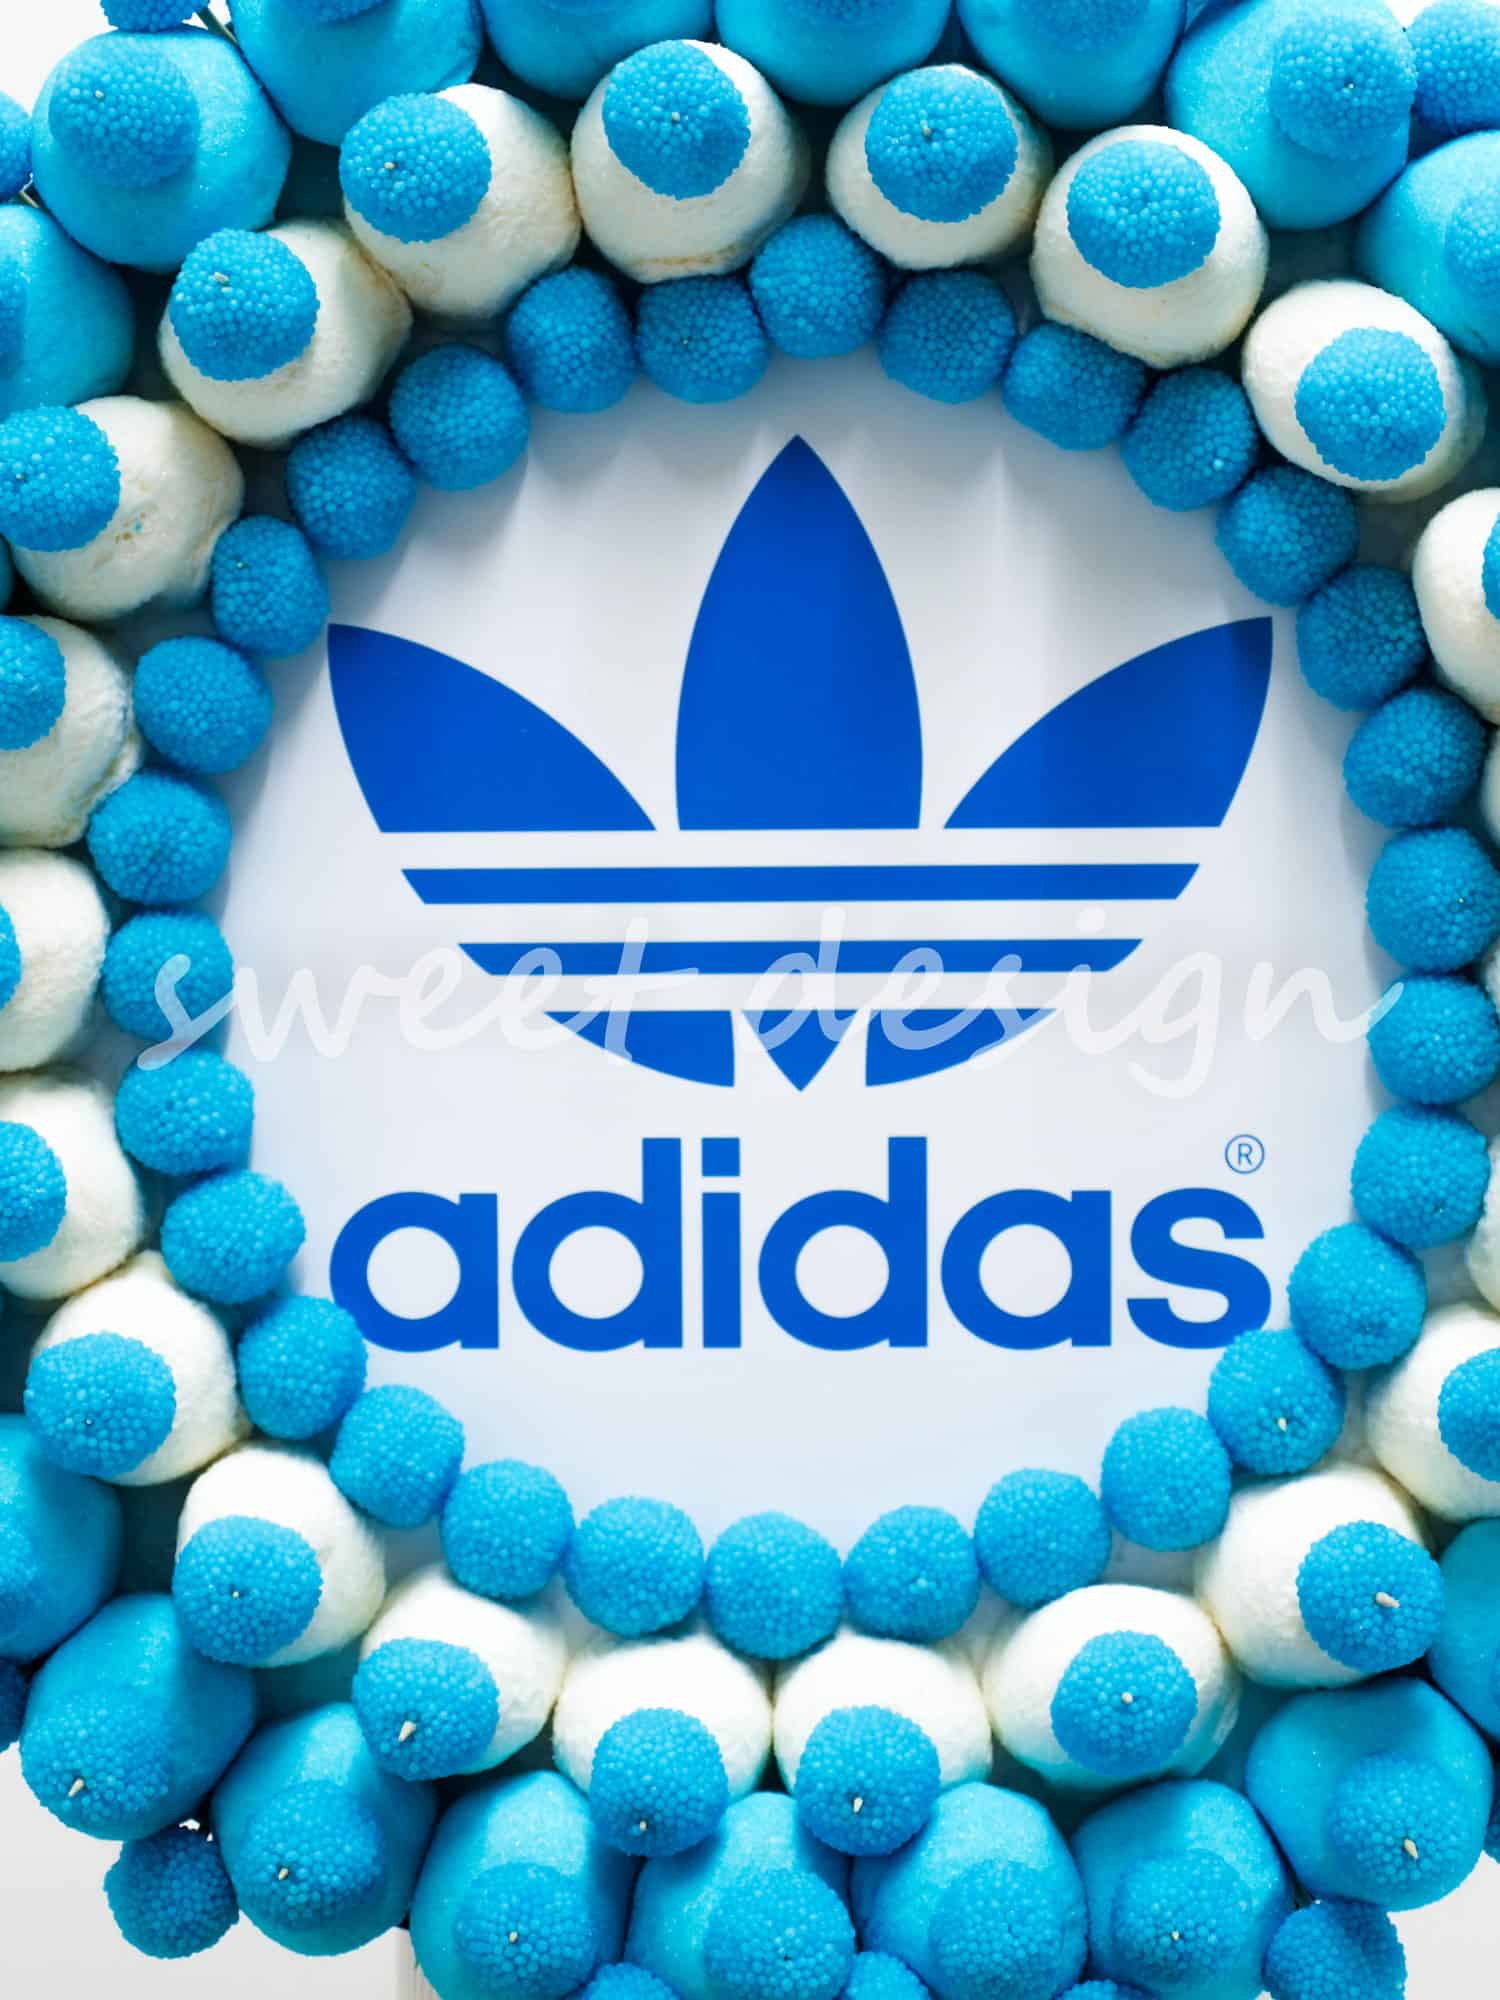 Duquesa cuscús Canal Evento Adidas - Sweet Design